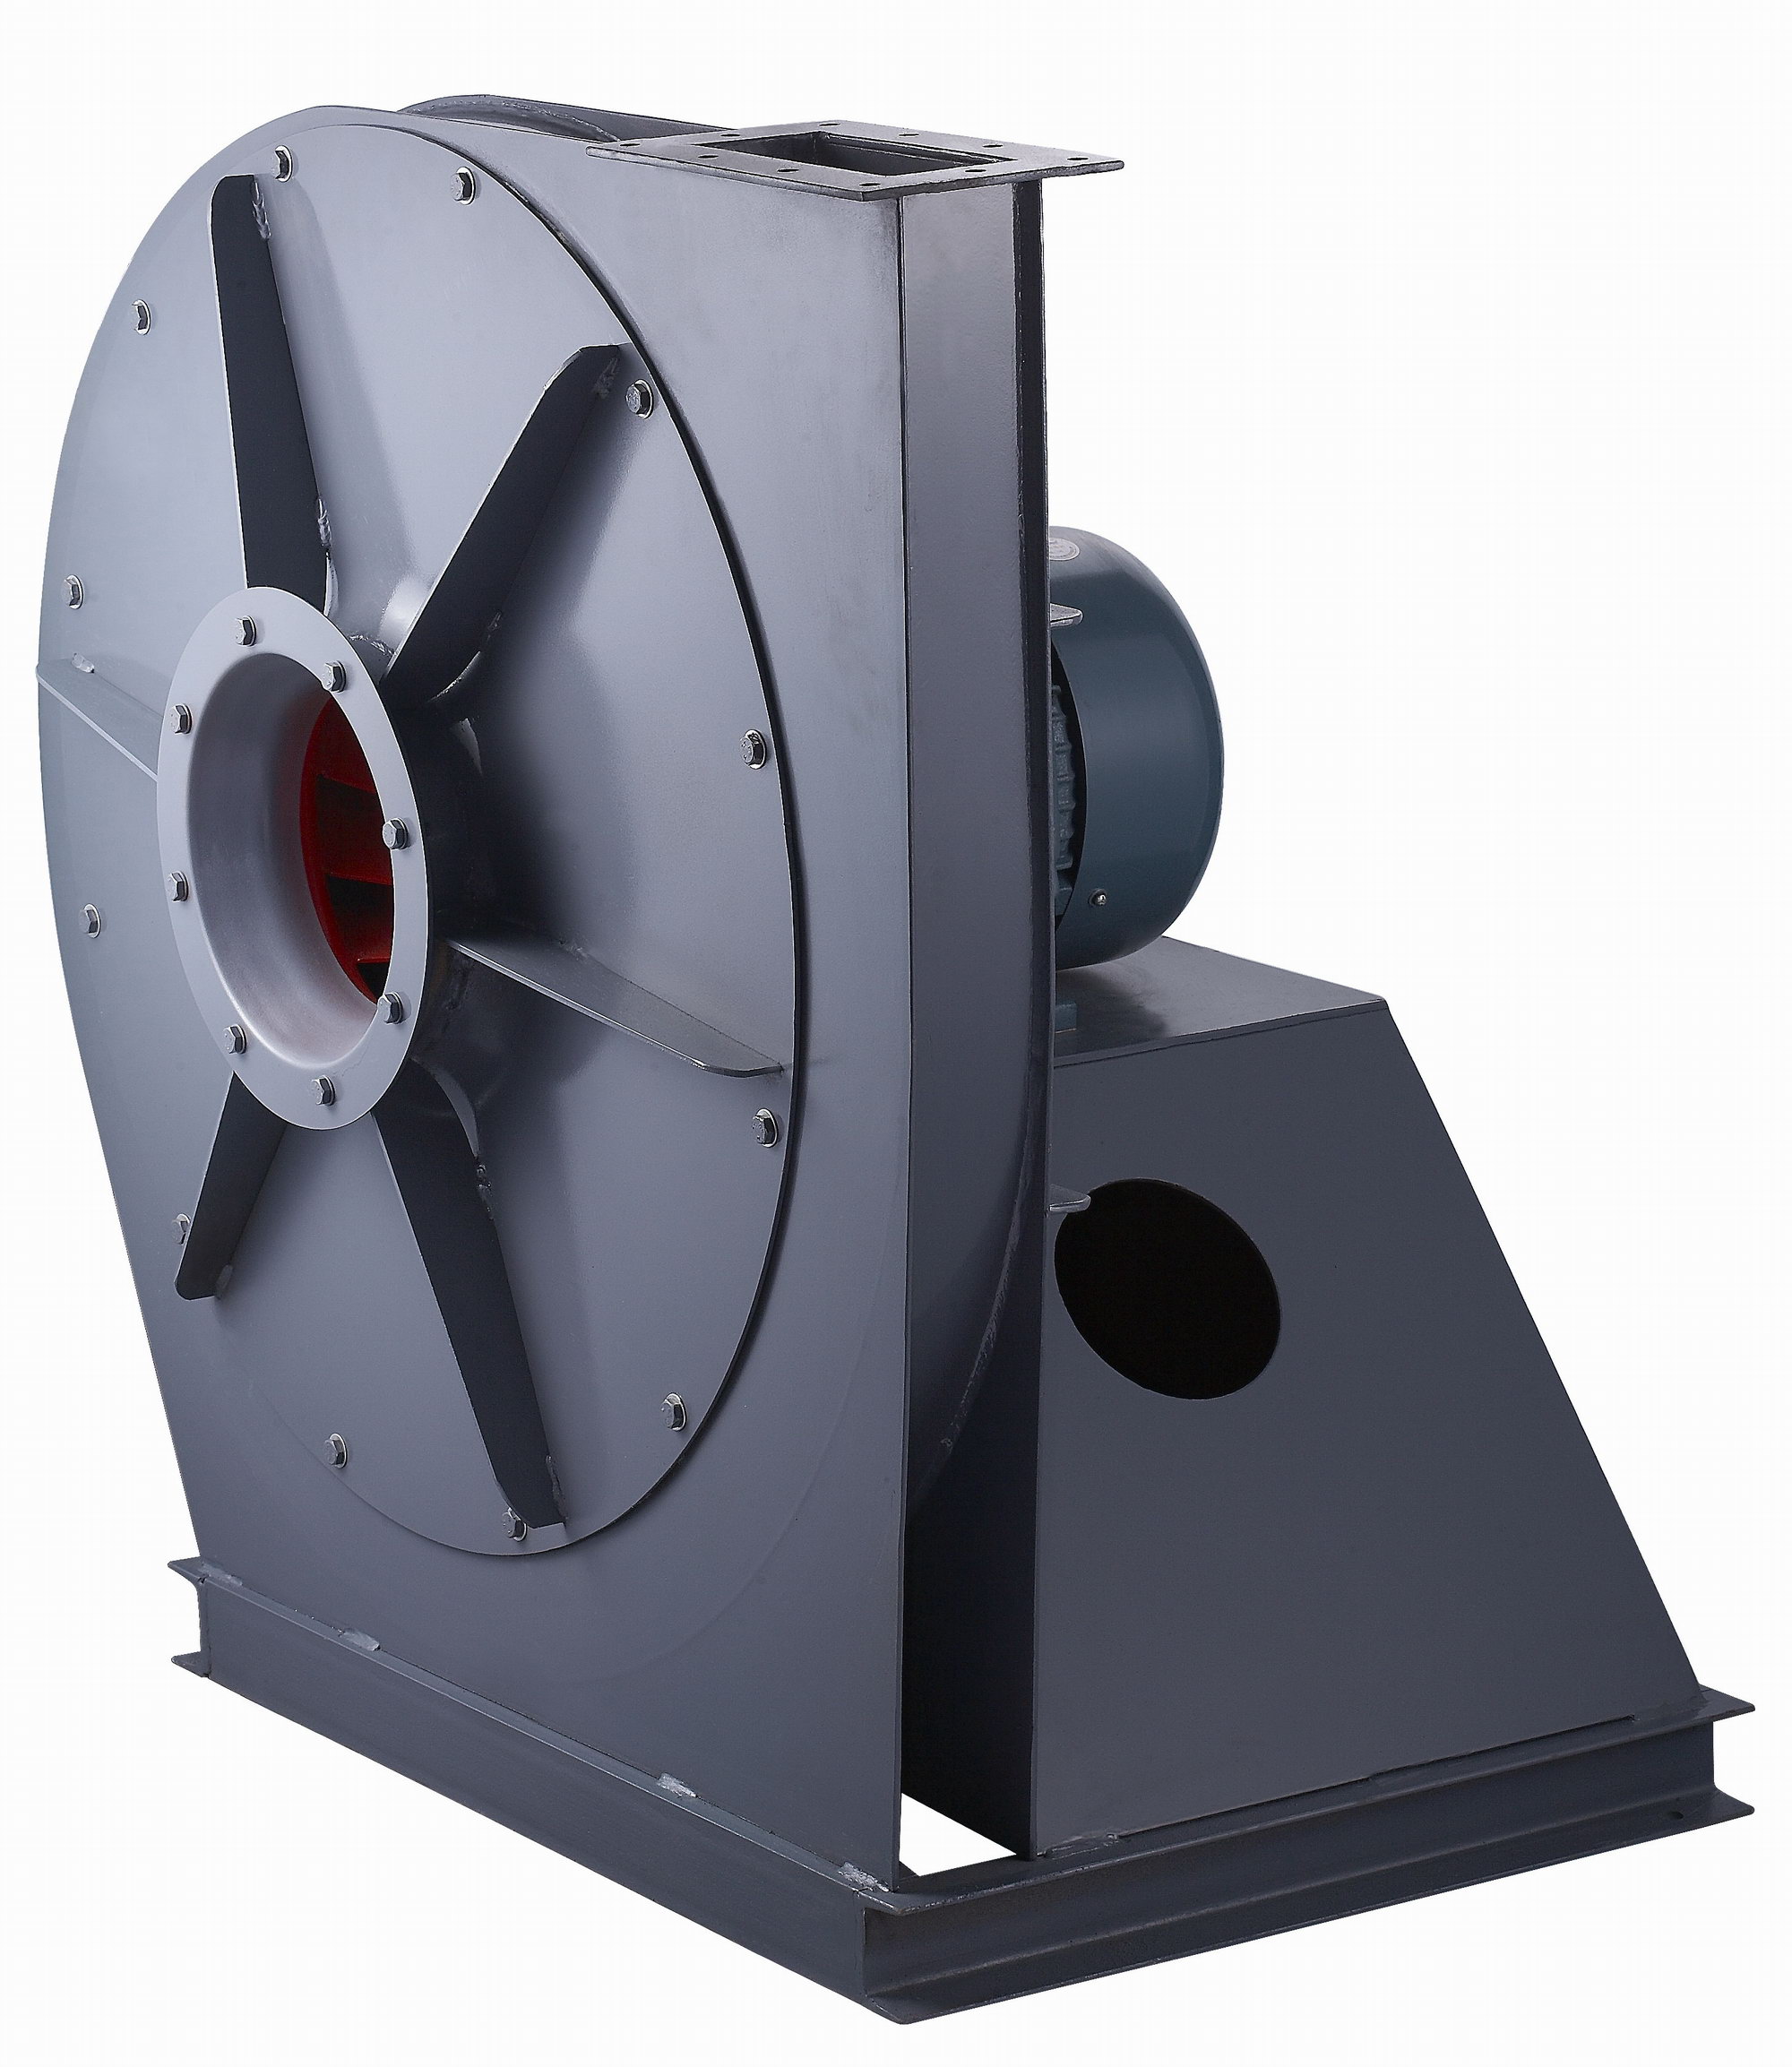 9-19 high pressure centrifugal fan